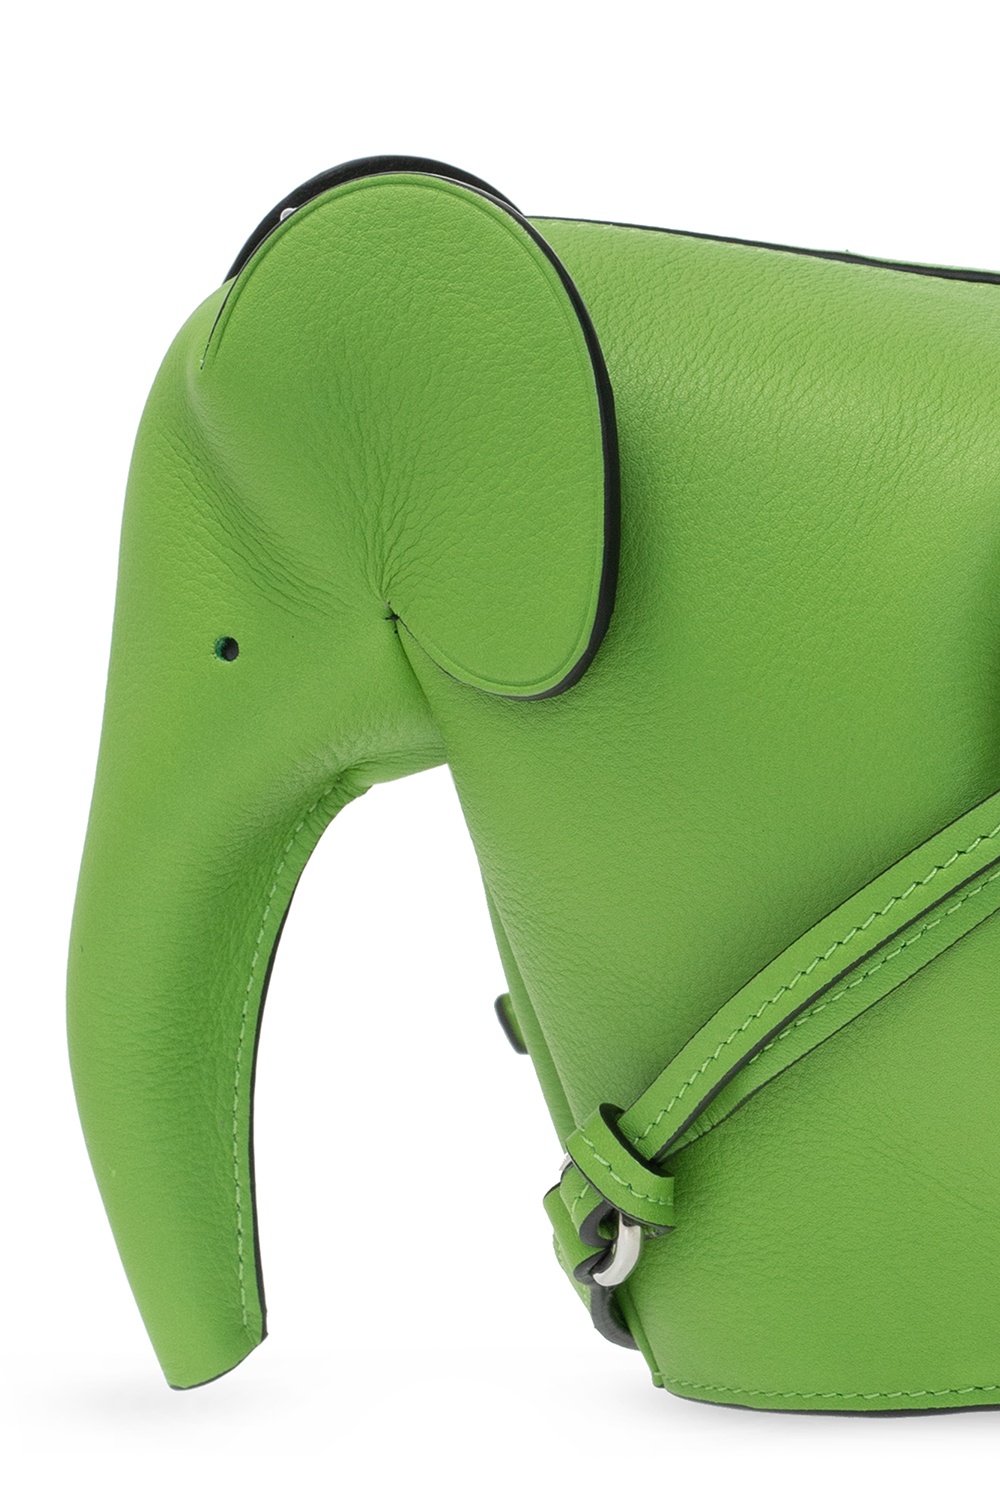 Loewe ‘Elephant’ shoulder bag